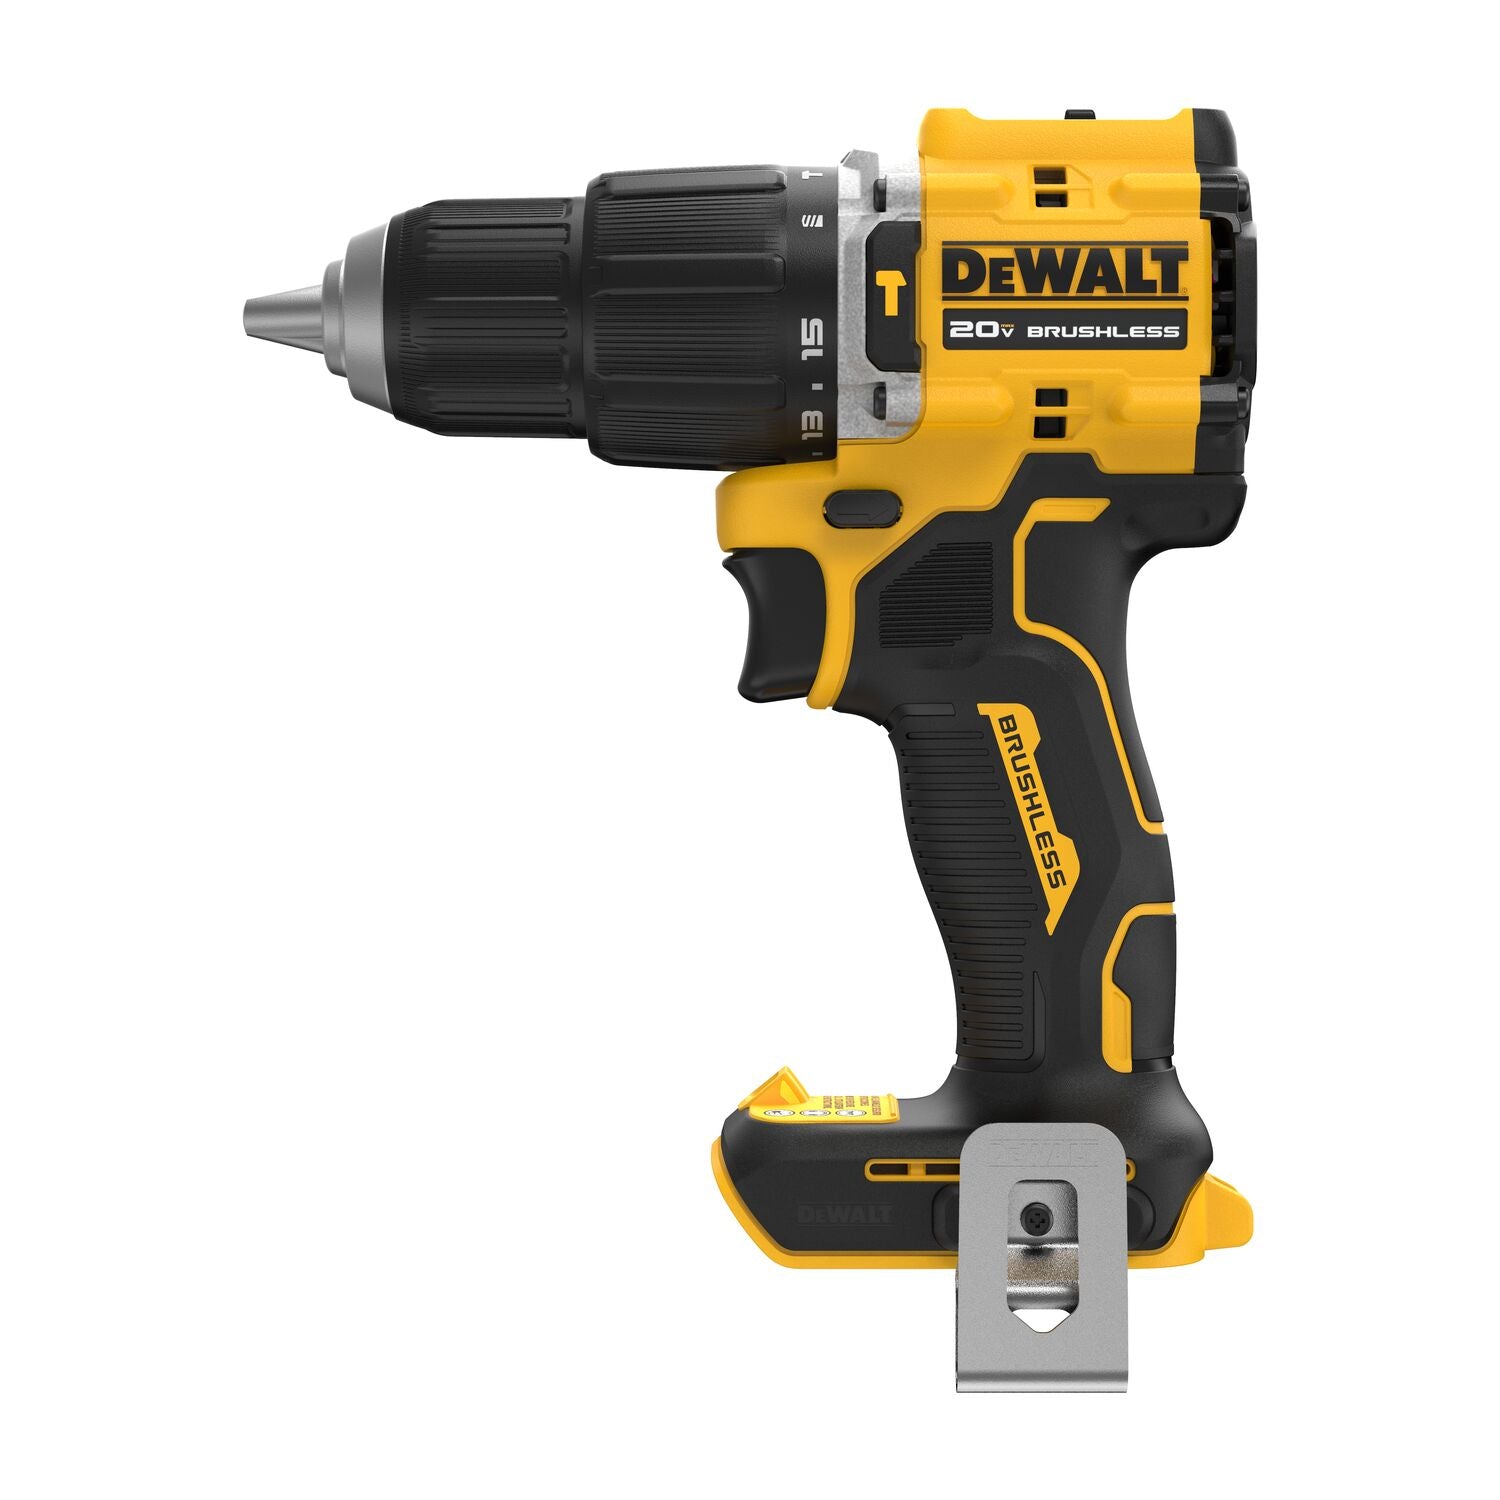 Dewalt DCD799B - ATOMIC COMPACT SERIES™ 20V MAX* Brushless Cordless 1/2 in. Hammer Drill